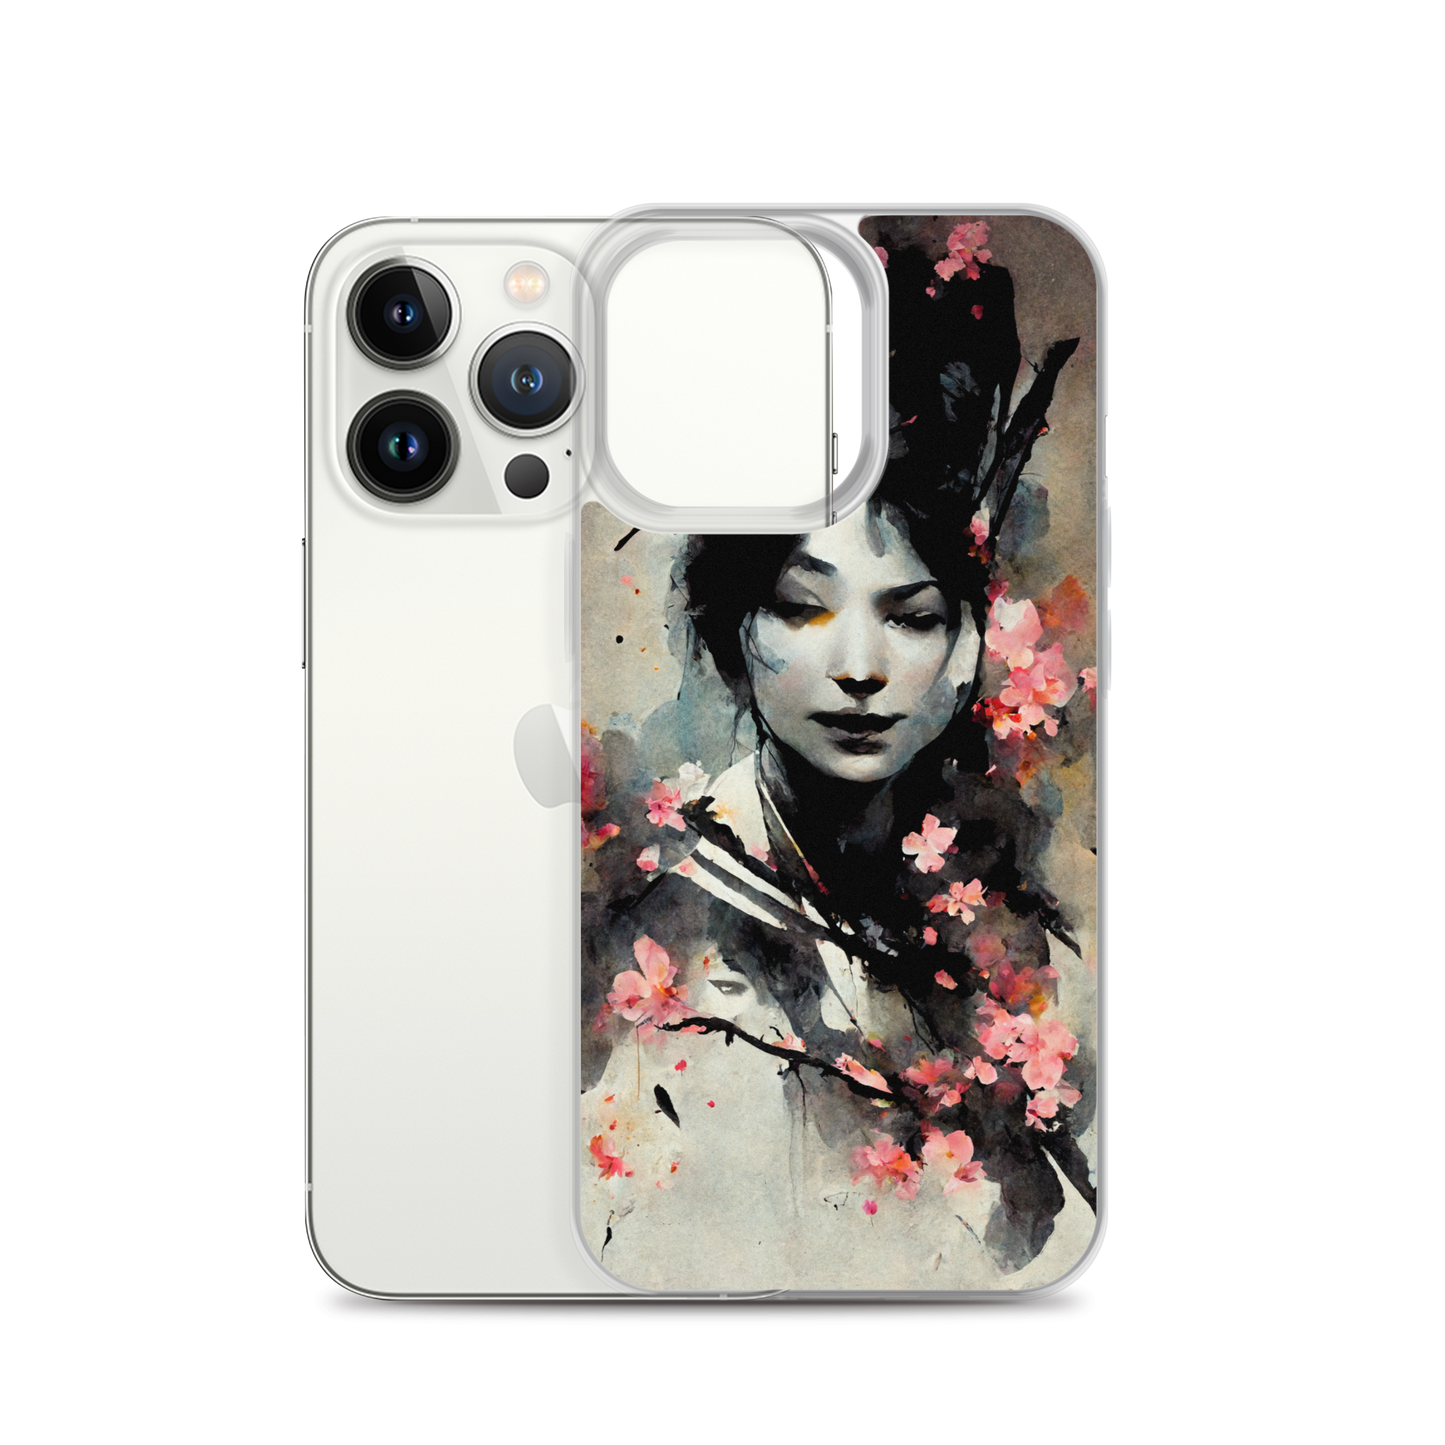 Geisha Sakura - Cherry Blossom iPhone Cases